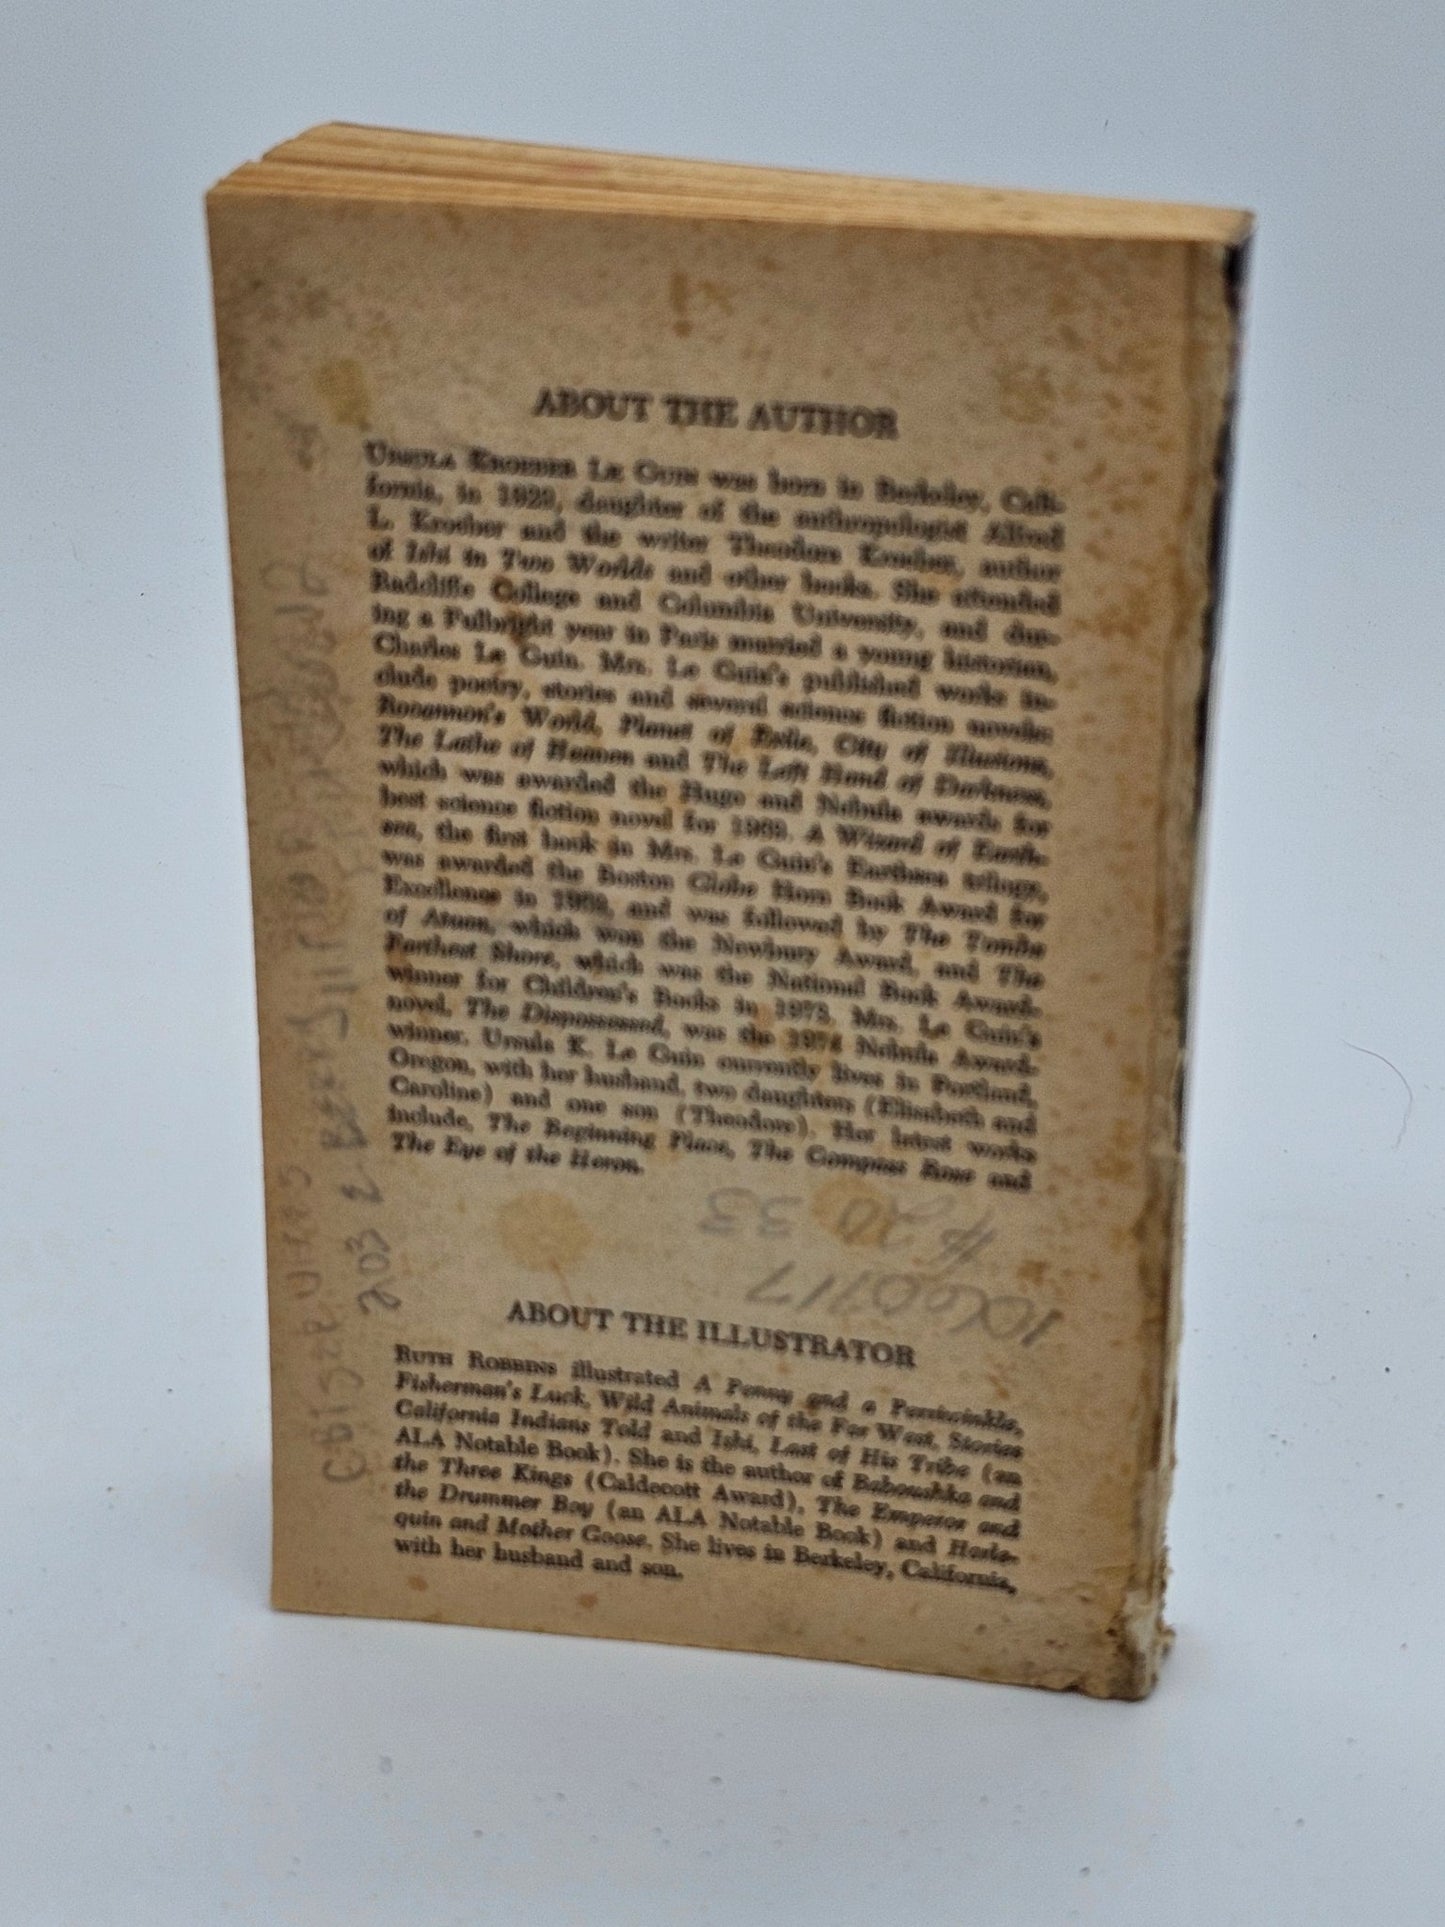 Bantam Books - Wizard Of Earthsea | Ursula K. Le Guin | Paperback Book - Paperback Book - Steady Bunny Shop